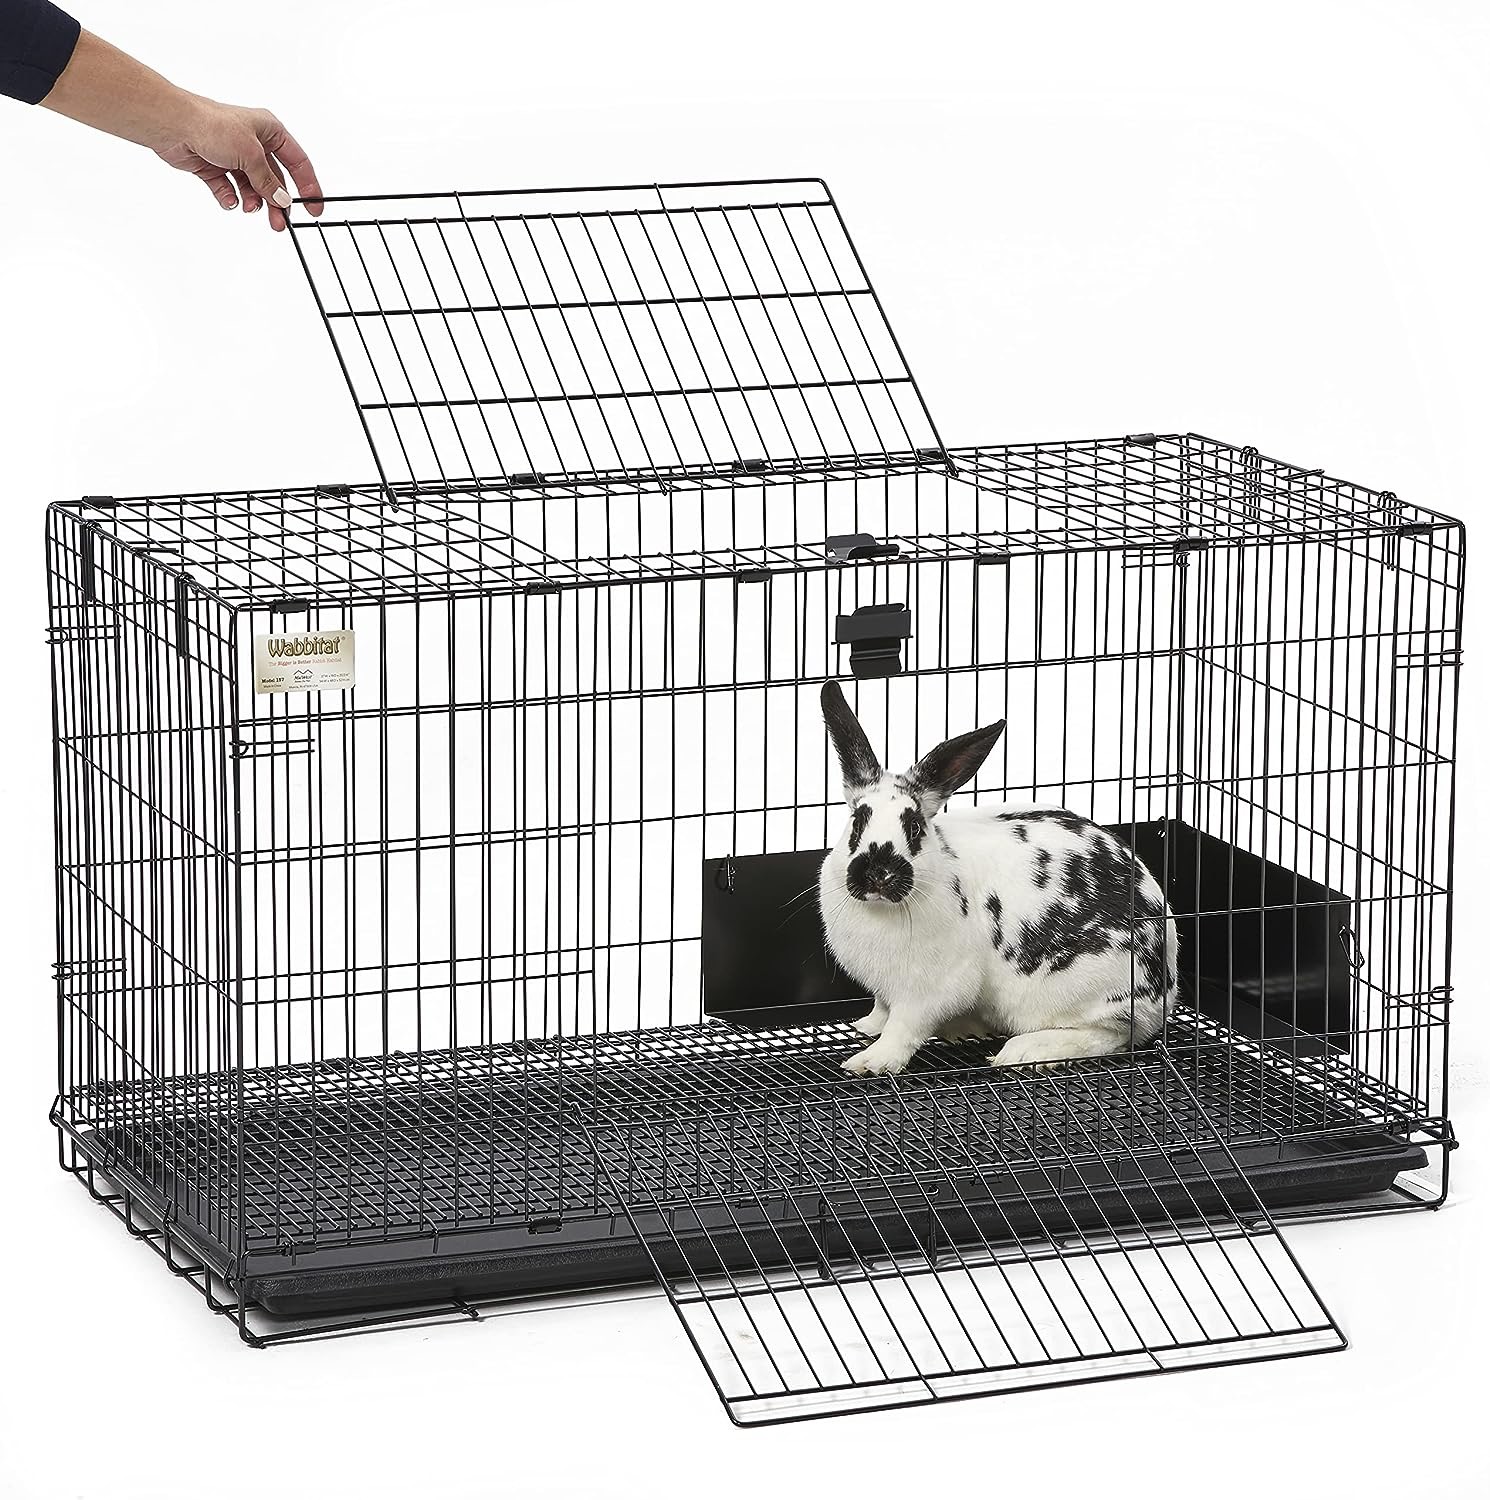 Wabbitat Folding Rabbit Cage 37"W  x  18"D x 20.5"H 